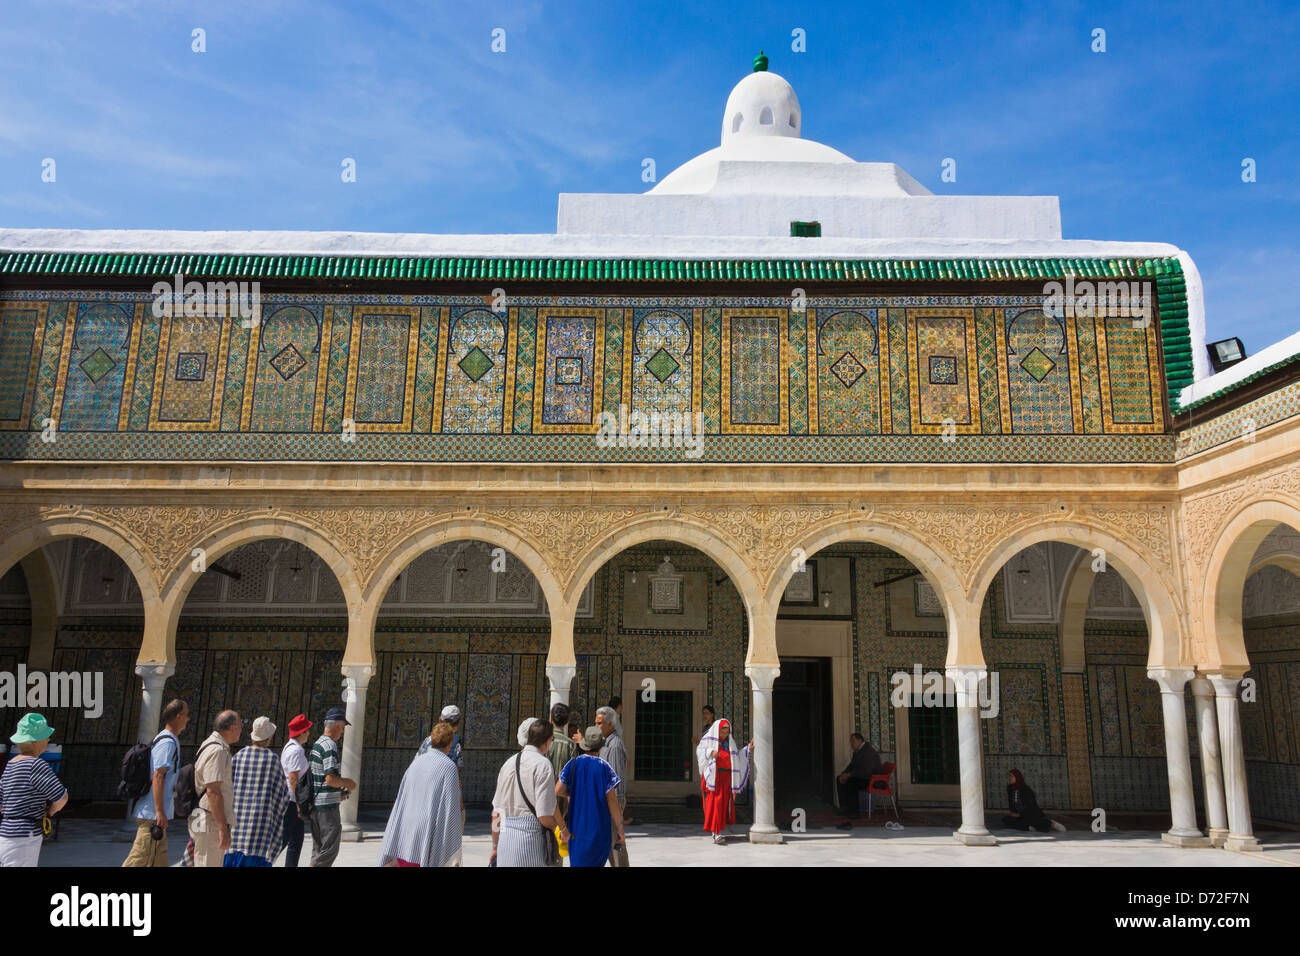 Mausoleum and Medrasa of Abi Zamaa Alo-Balawi, Kairouan, Tunisia Stock Photo